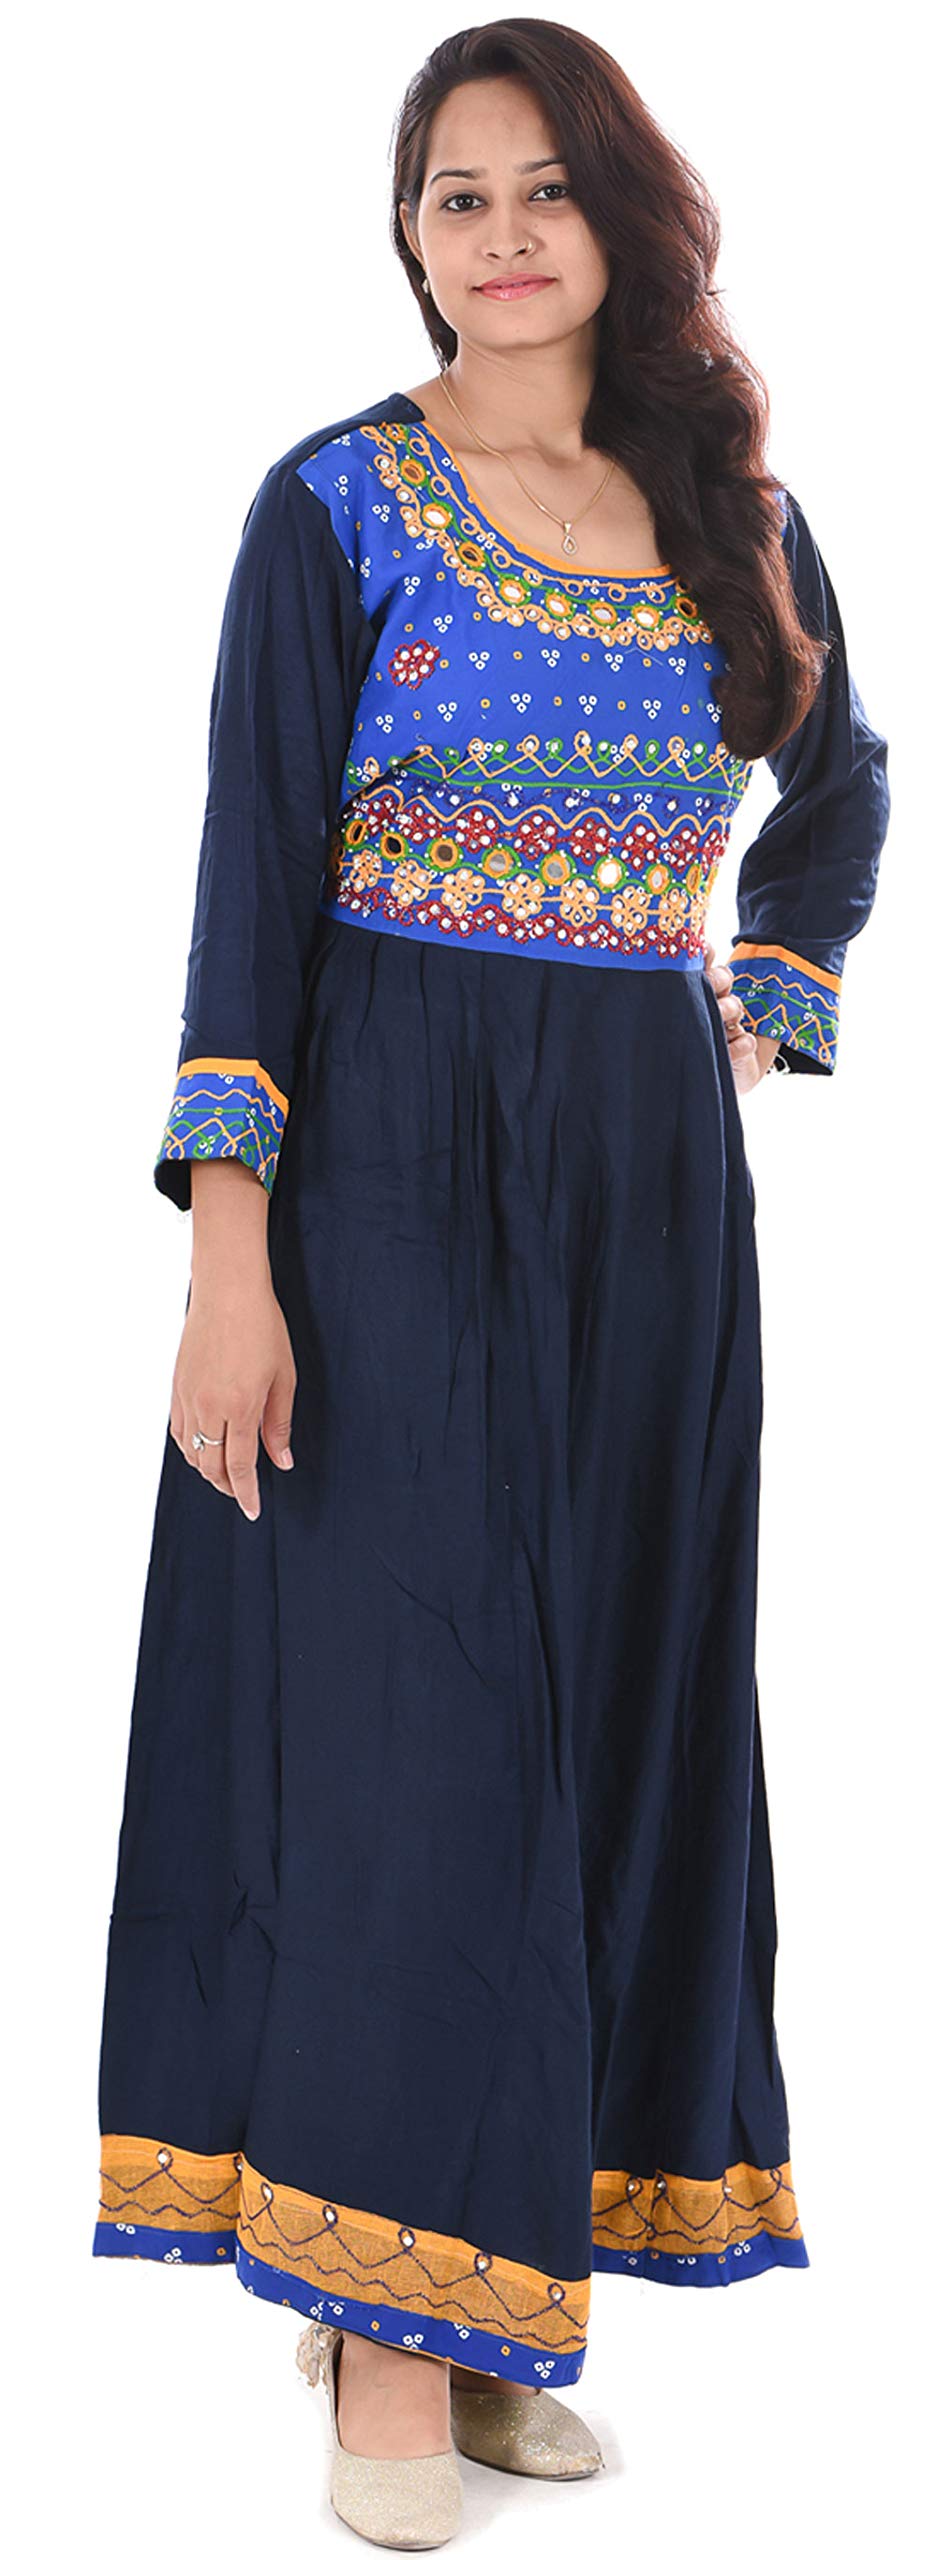 lakkar haveli Indian 100% Cotton Blue Color Dress Mirror Print Women Fashion Long Plus Size